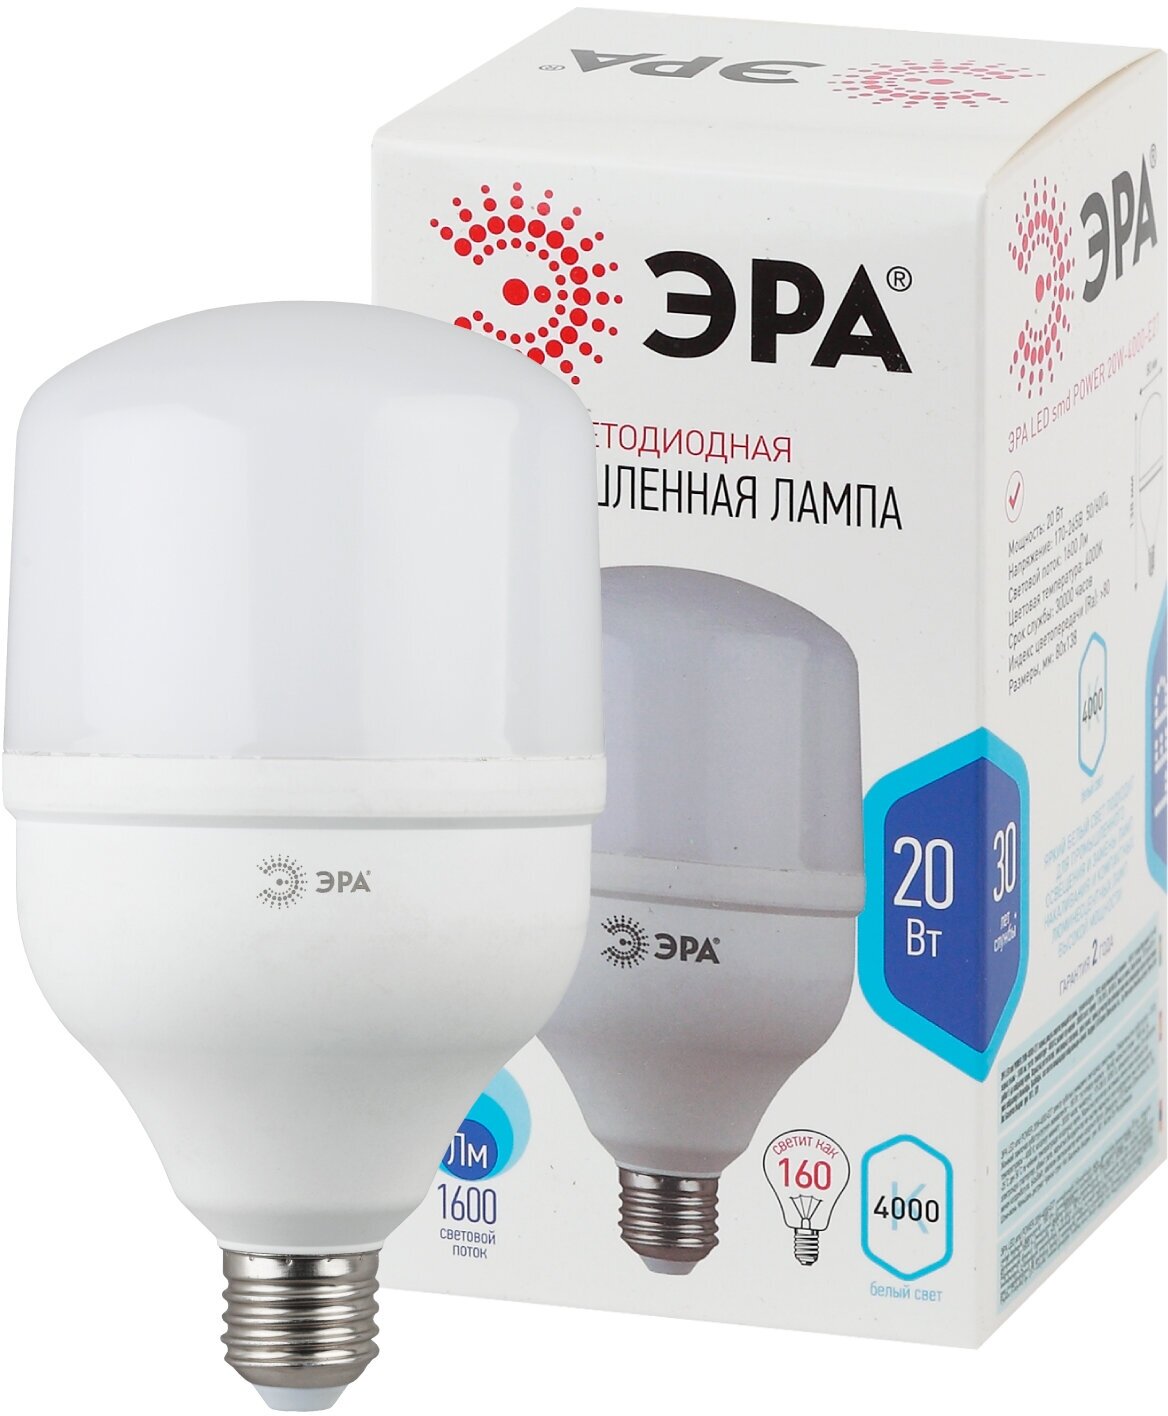 Лампа светодиодная ЭРА STD LED POWER T80-20W-4000-E27 Е27 20Вт колокол нейтральный белый свет арт. Б0027001 (1 шт.)